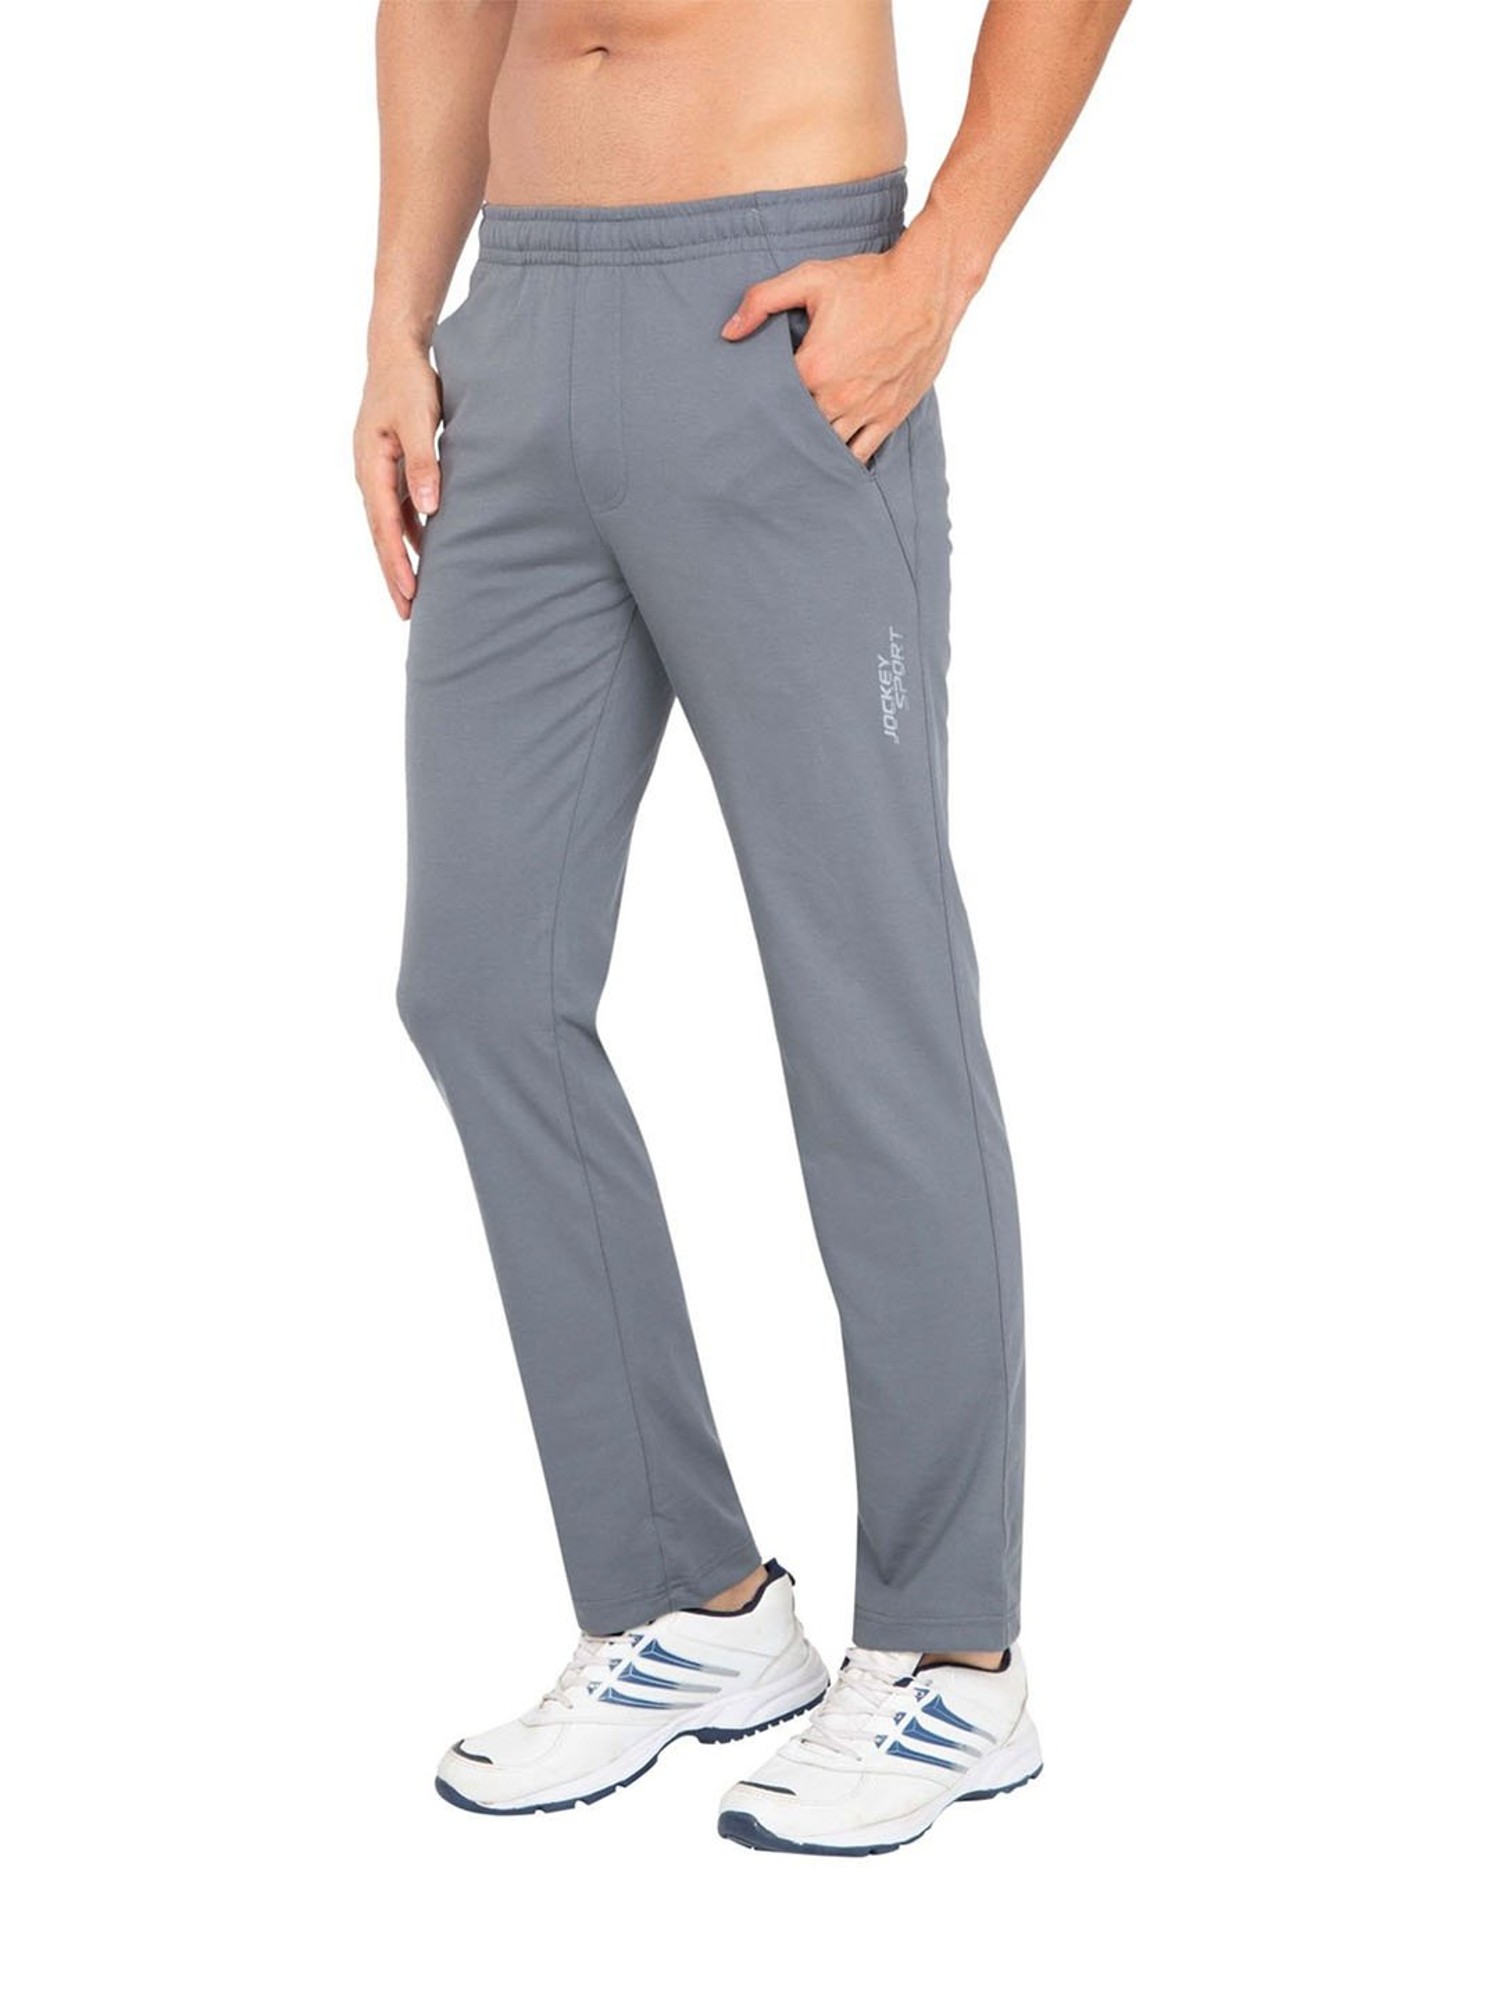 Buy Grey Track Pants for Women by Jockey Online  Ajiocom